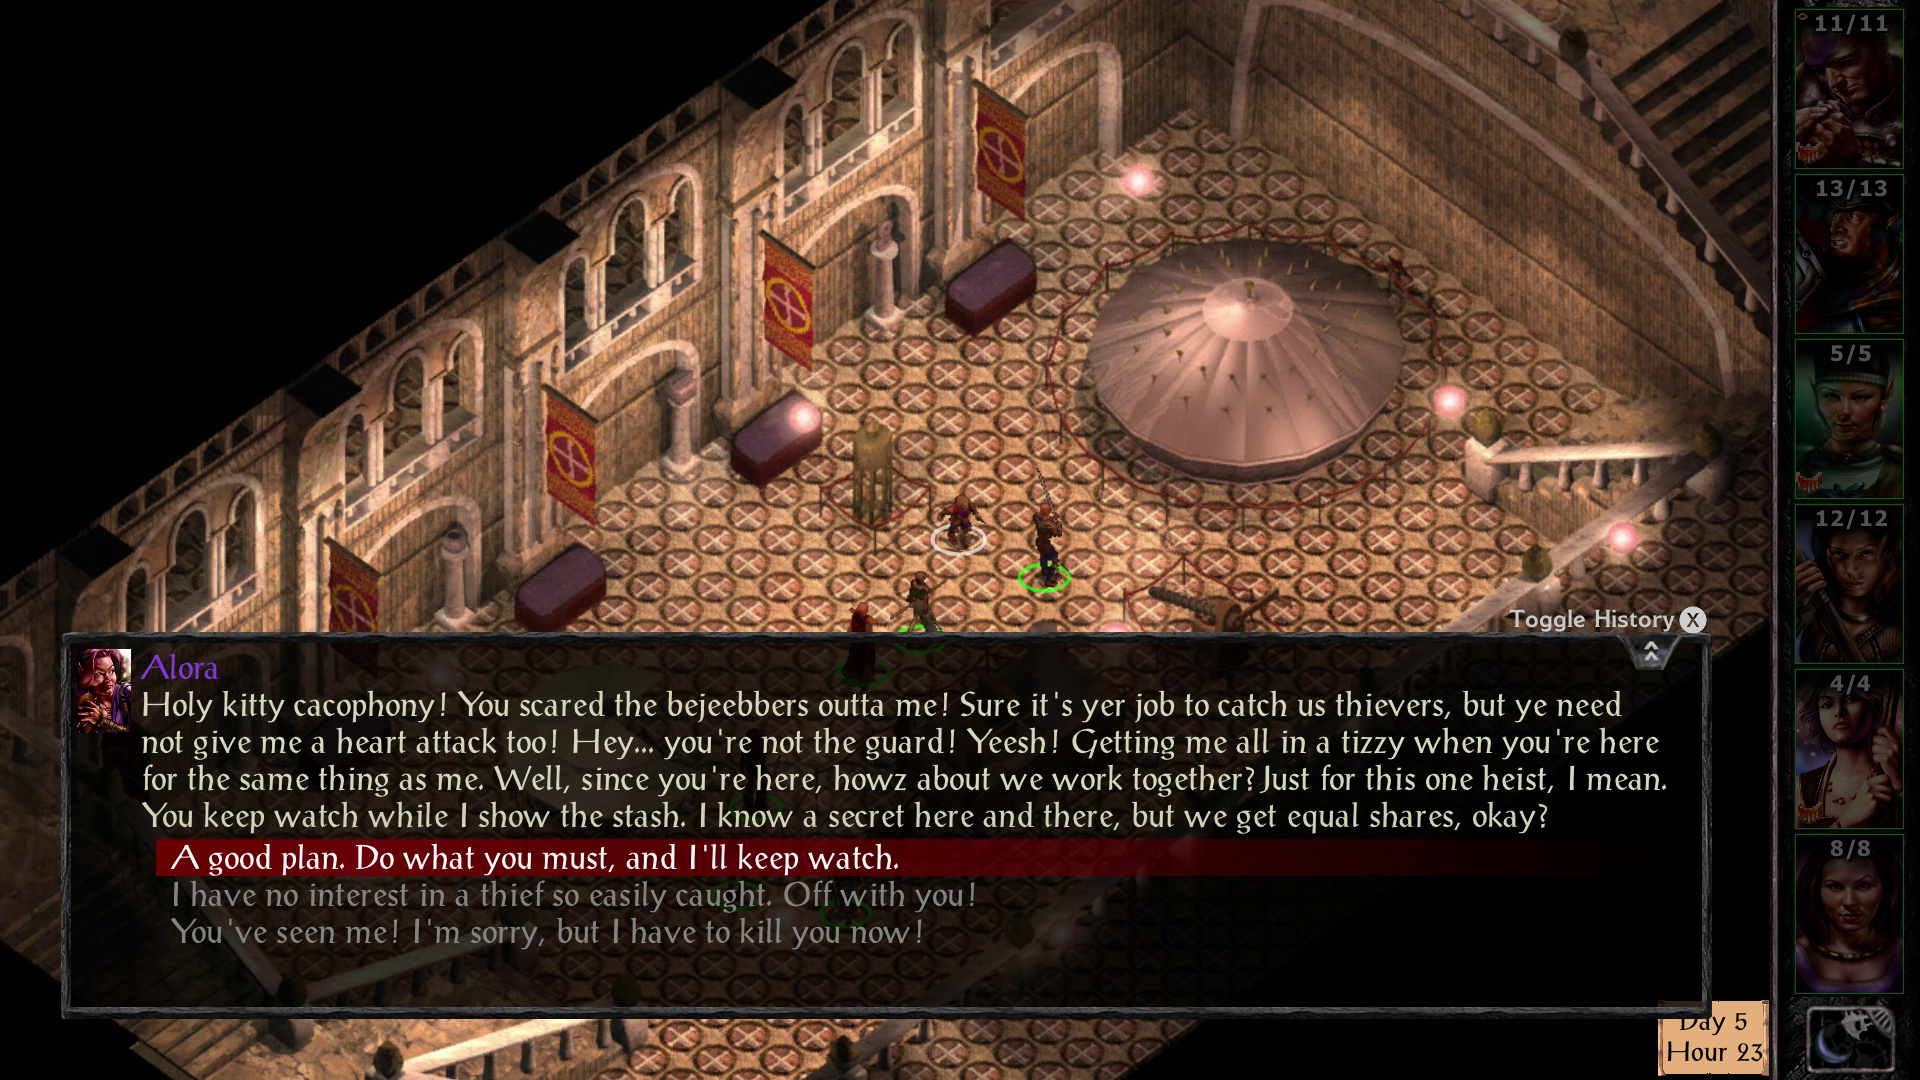 baldurs gate enhanced edition screenshots